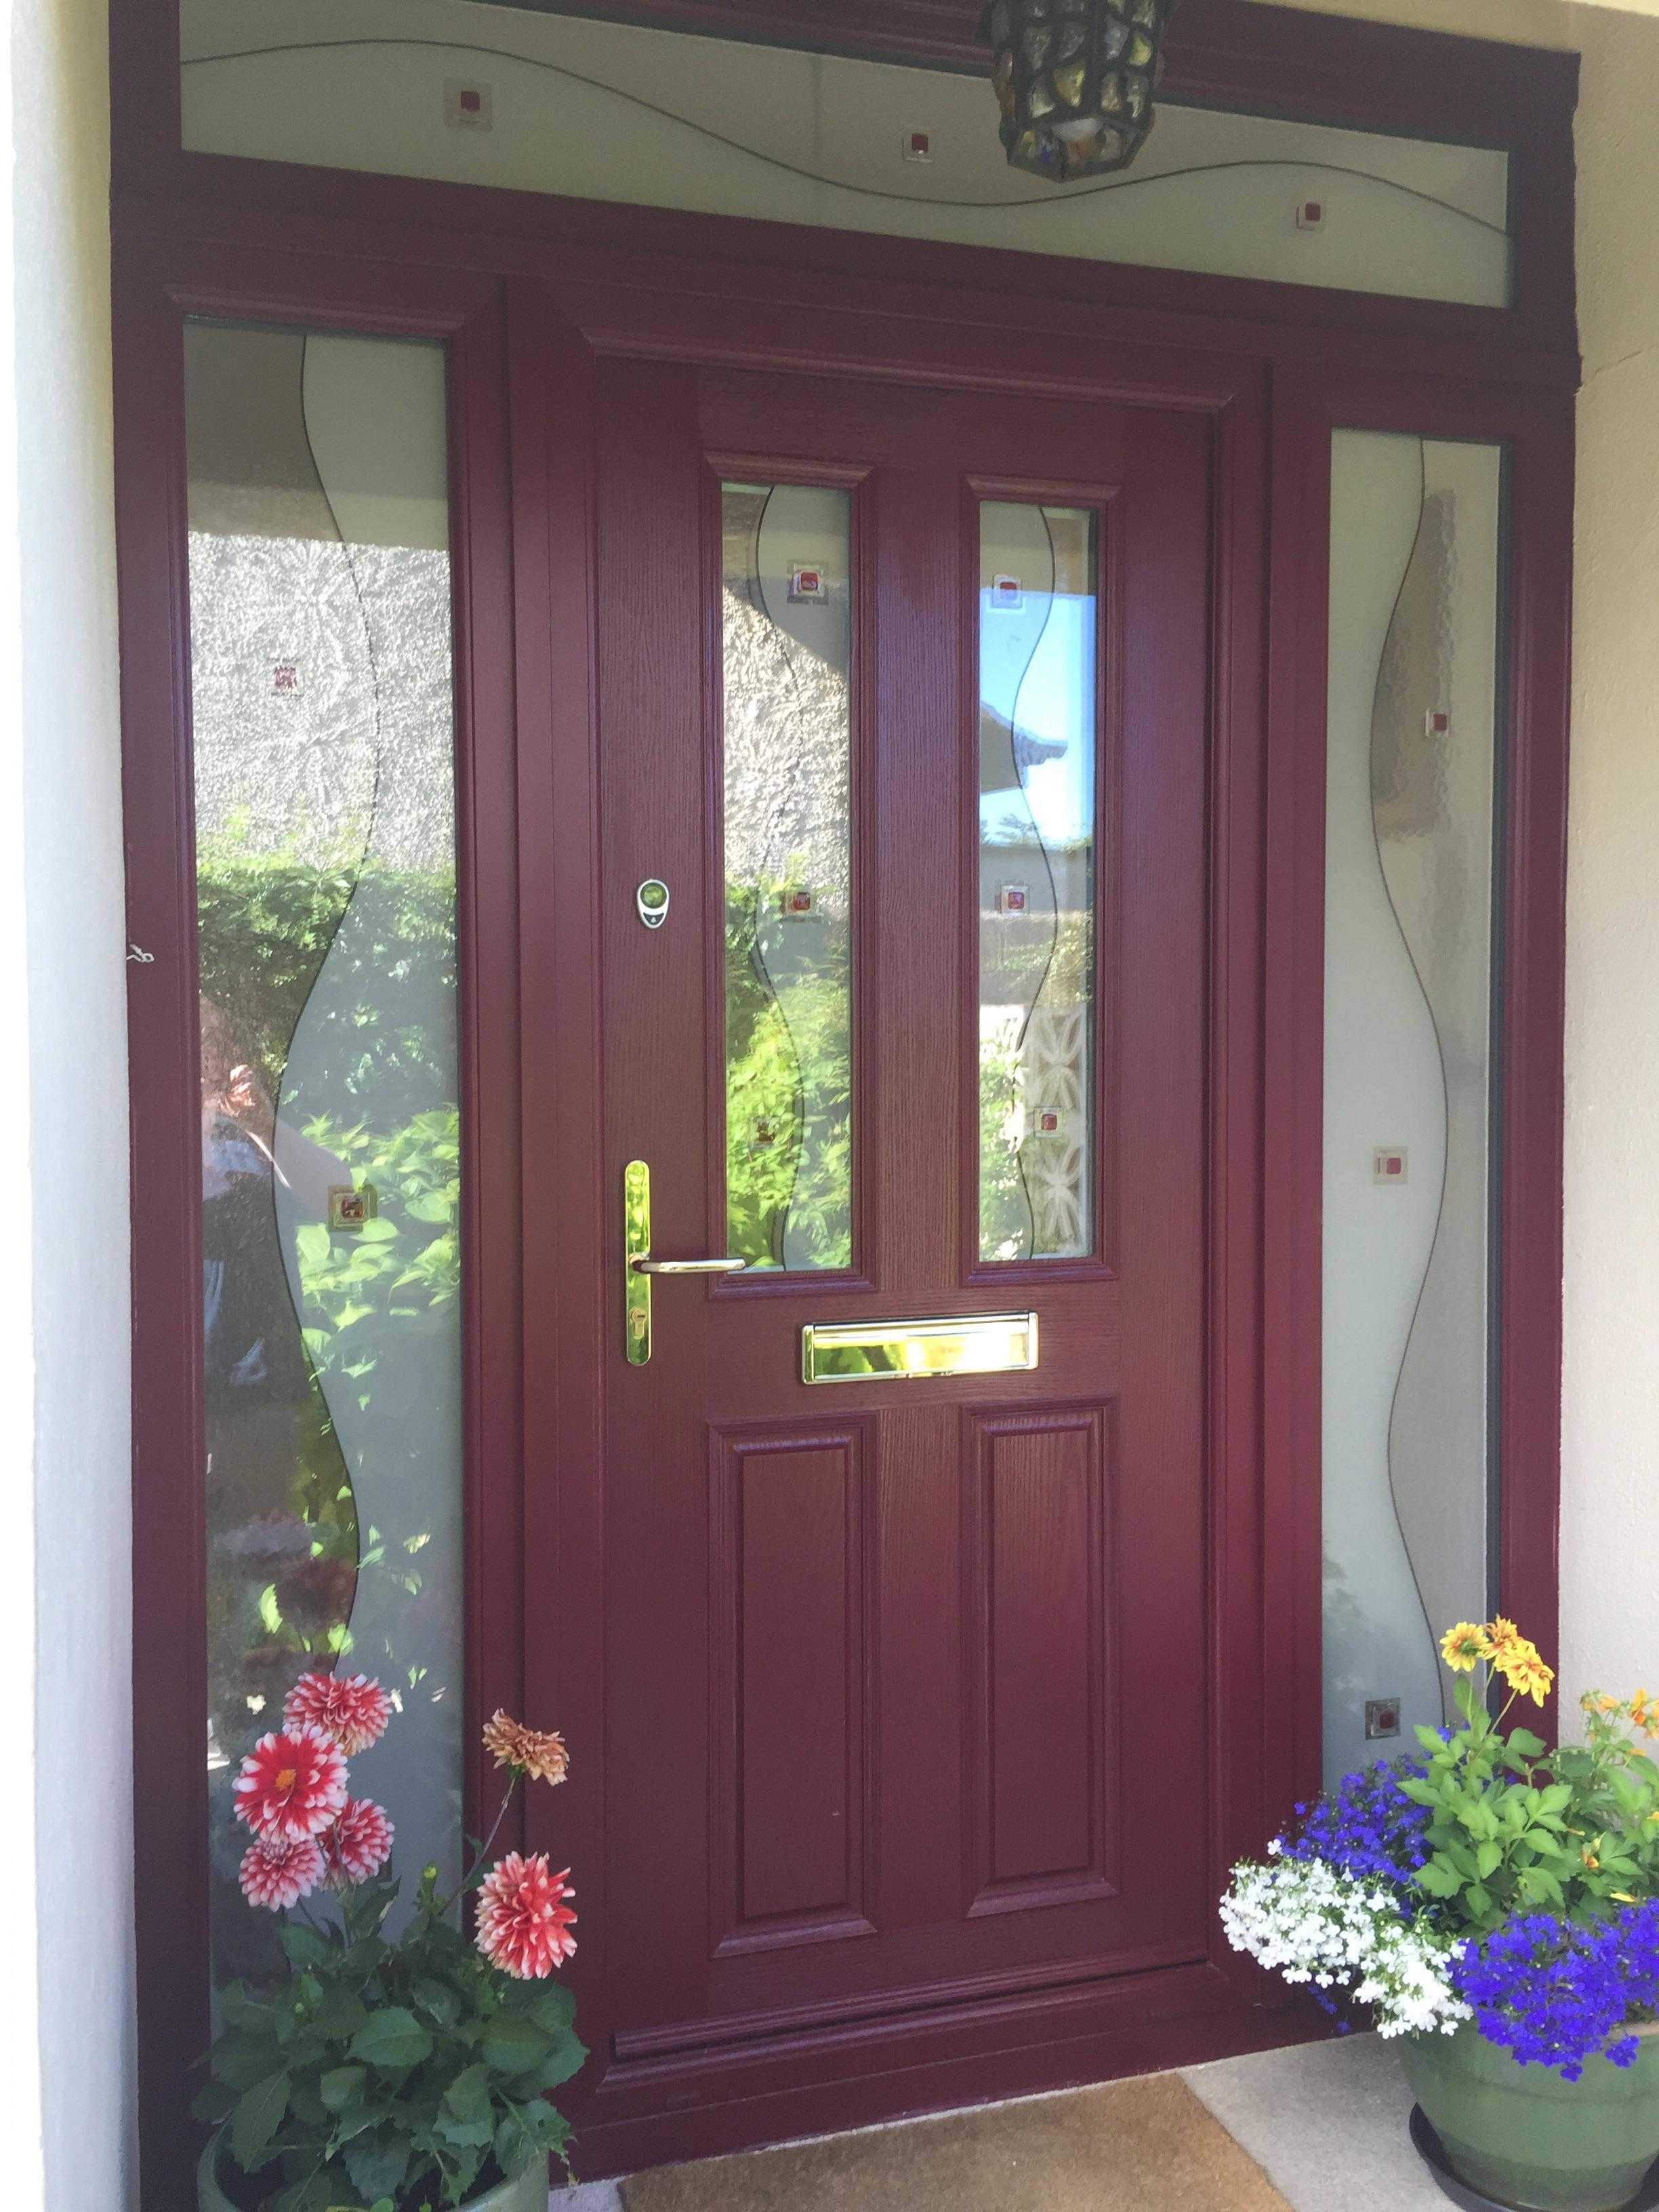 BURGUNDY APEER APM2 COMPOSITE FRONT DOOR FITTED BY ASGARD WINDOWS IN DUBLIN 18.